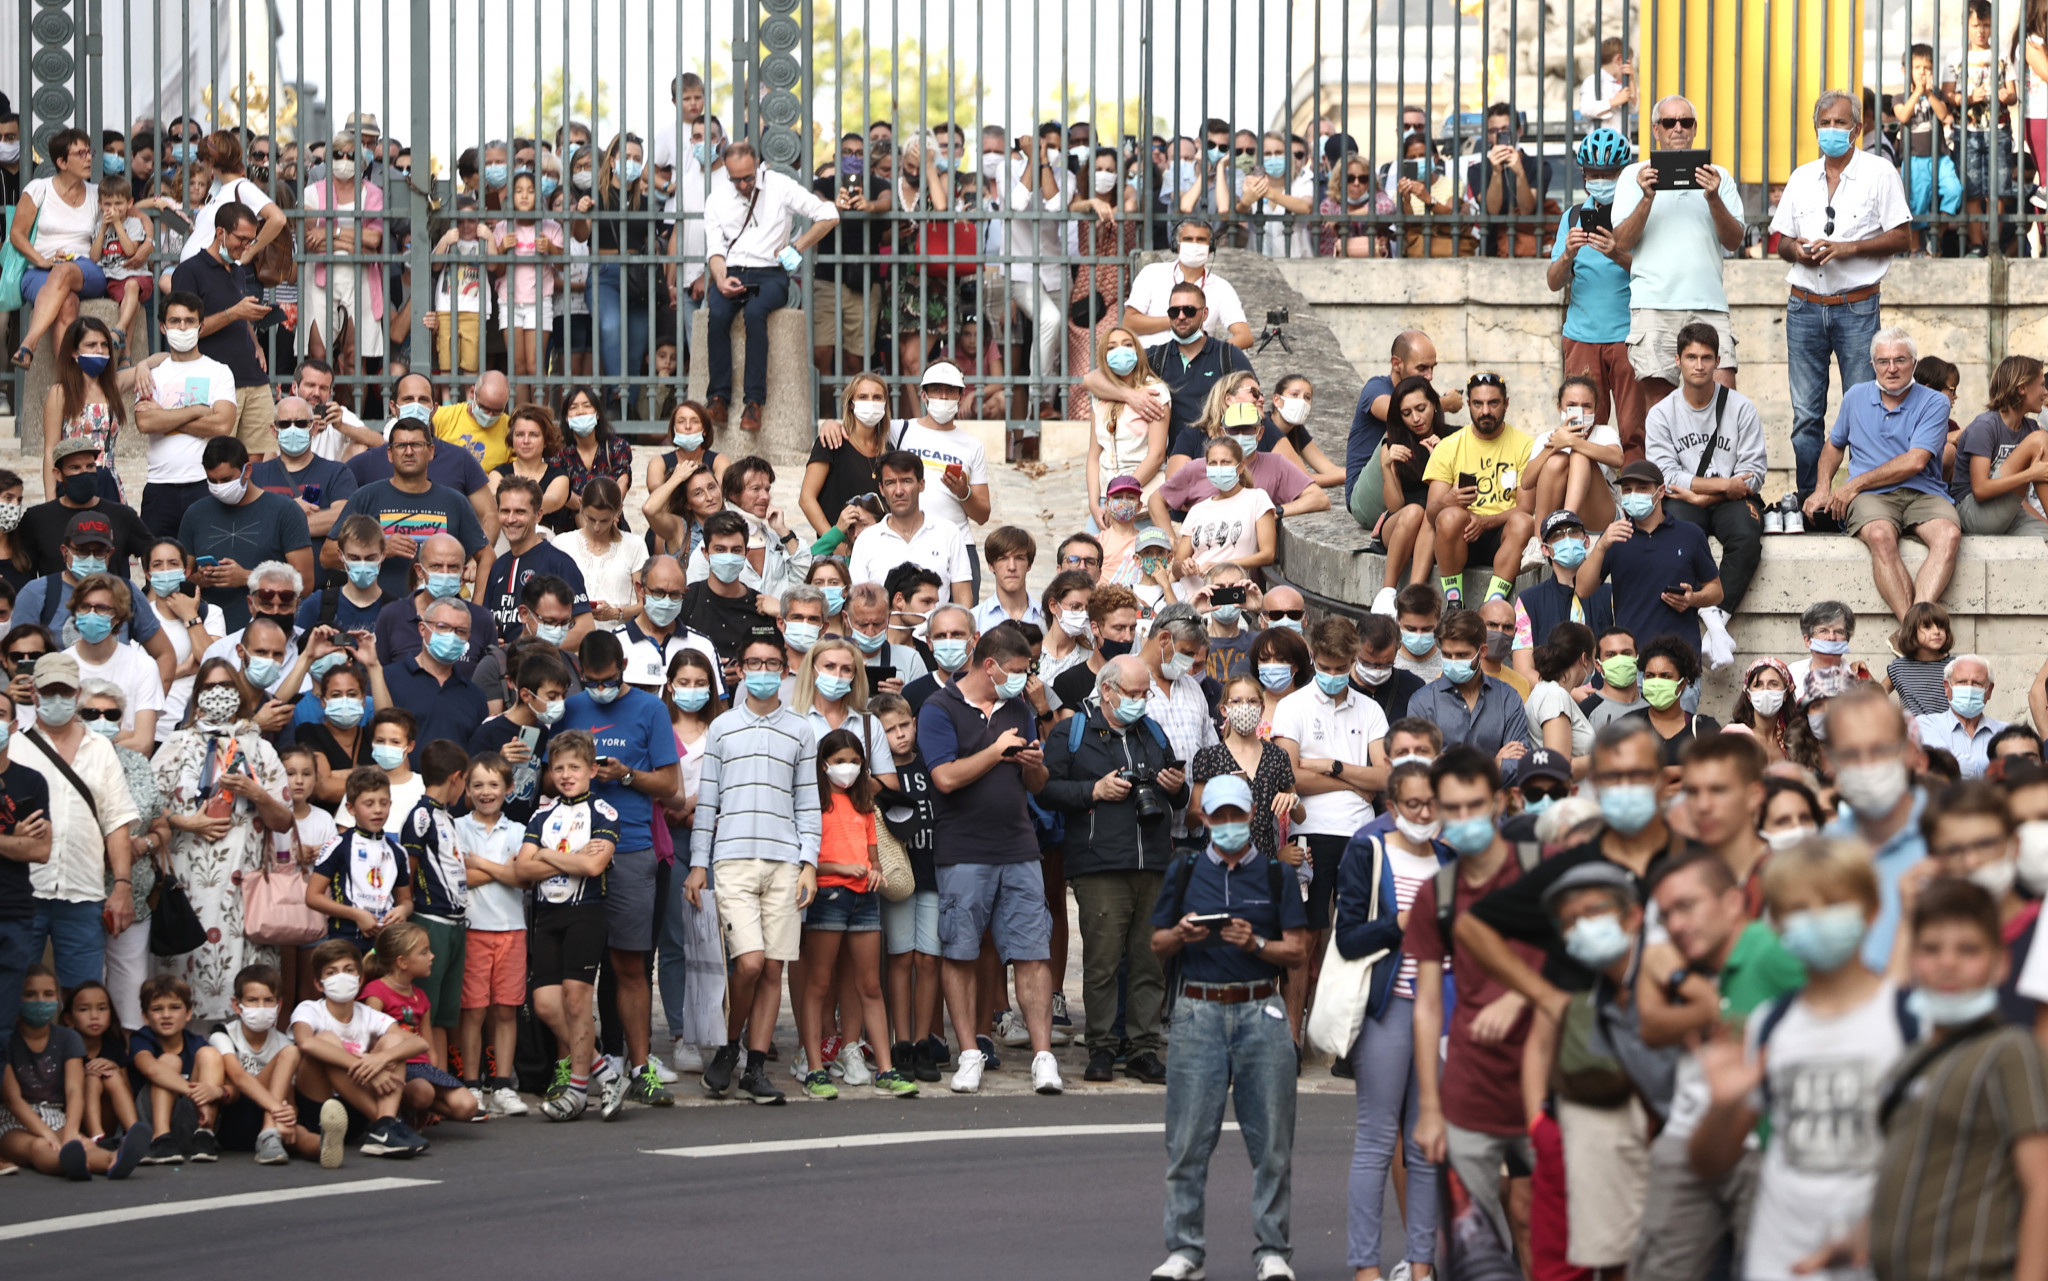 Spectators awaited the peloton's arrival into Paris ©Getty Images